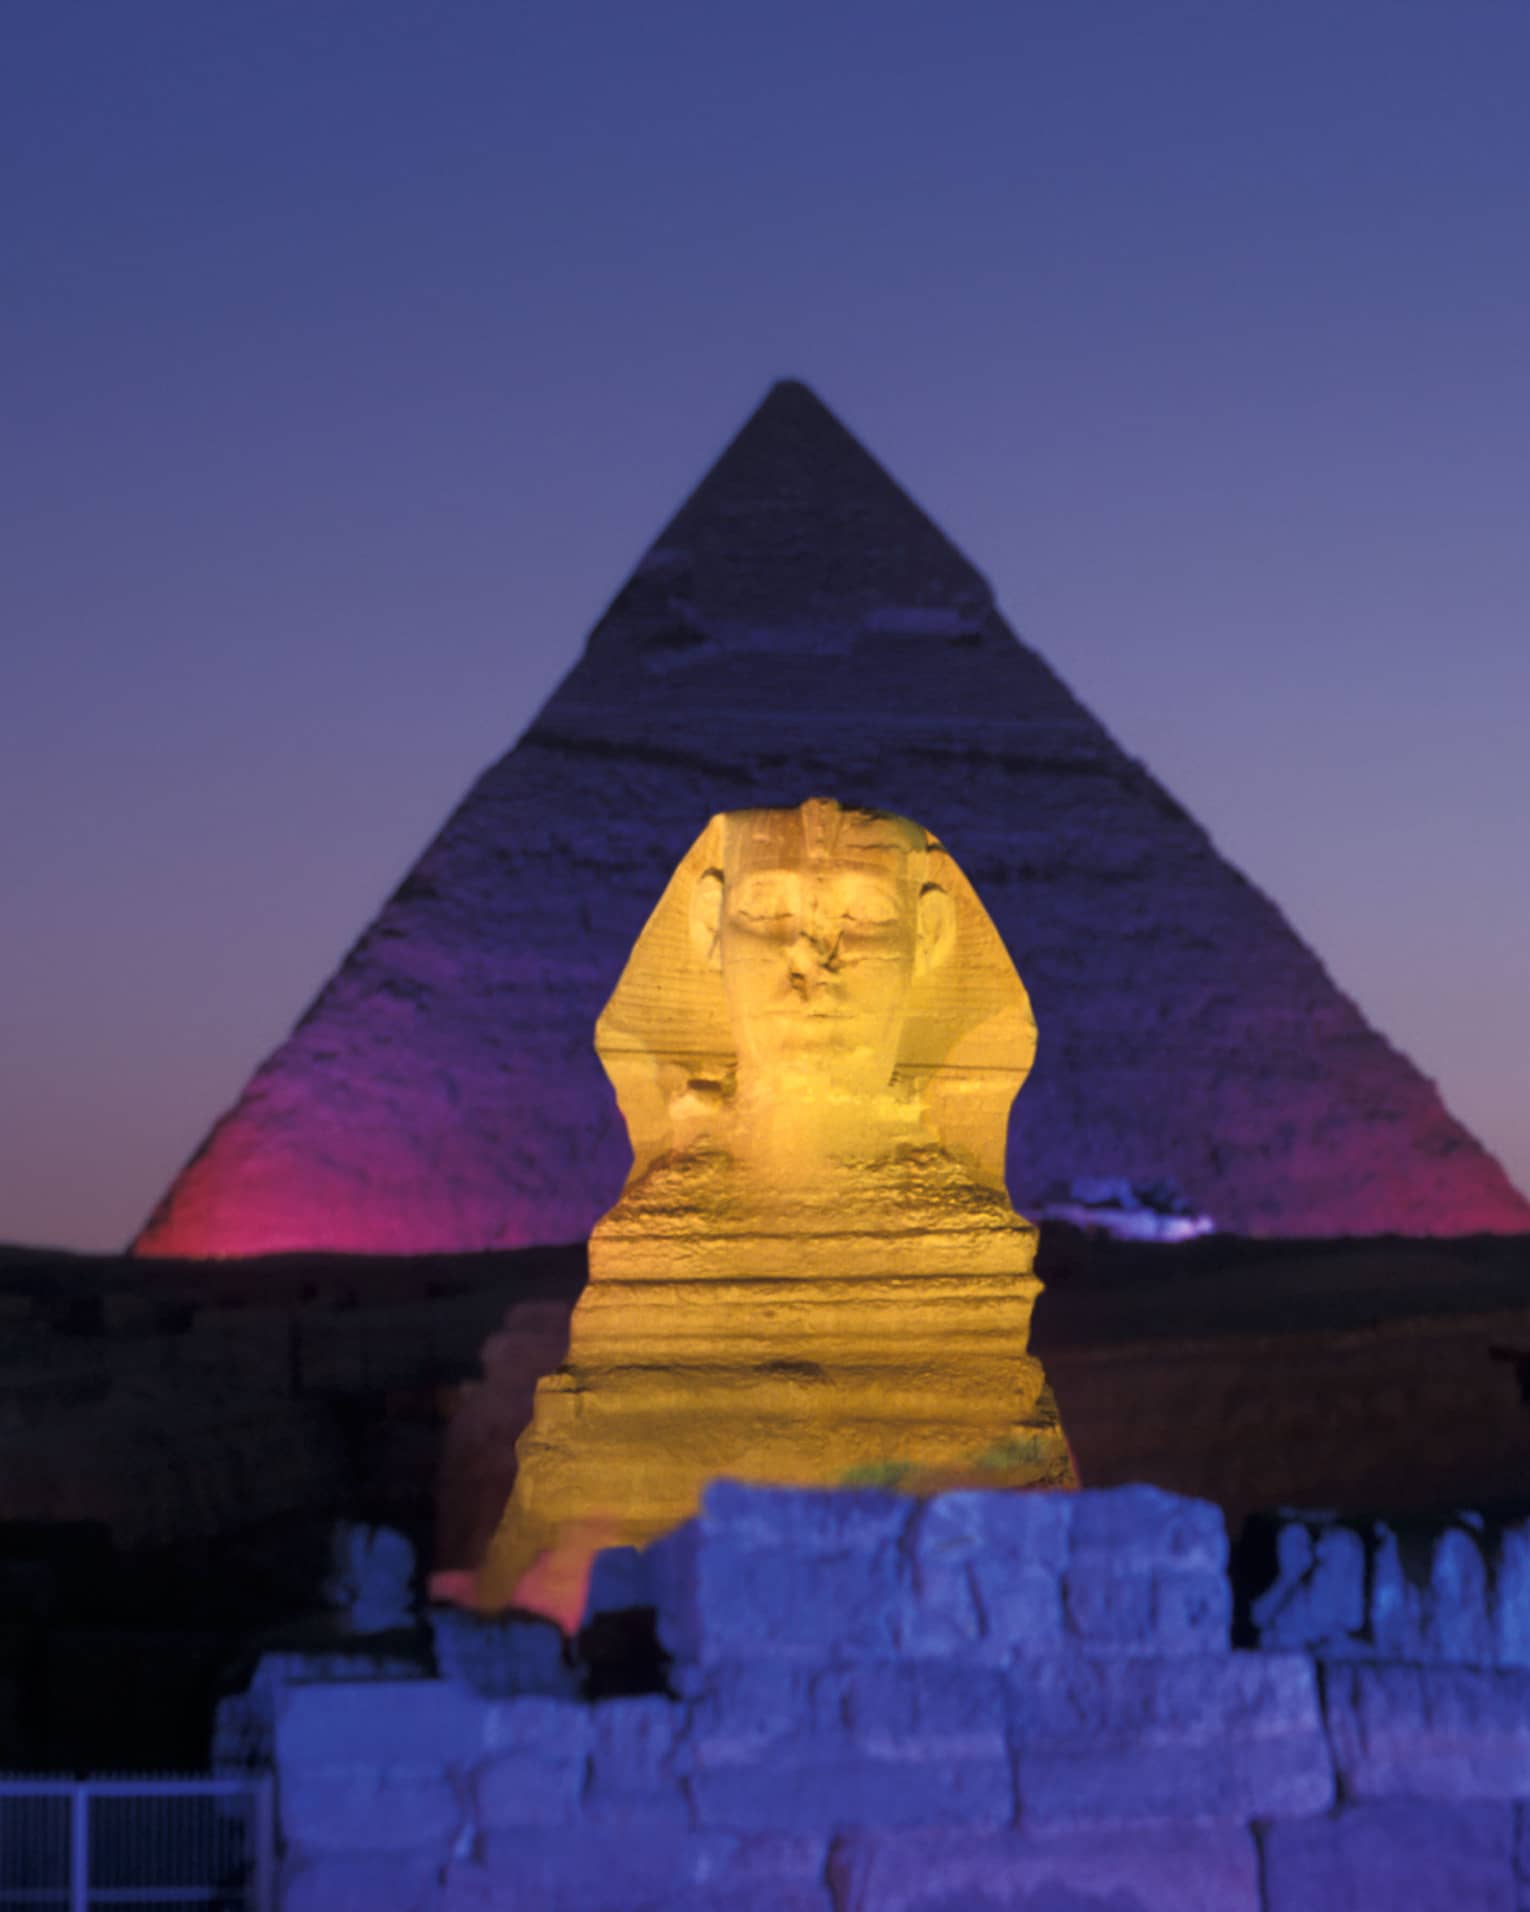 Sphinx and pyramid night light show Egypt